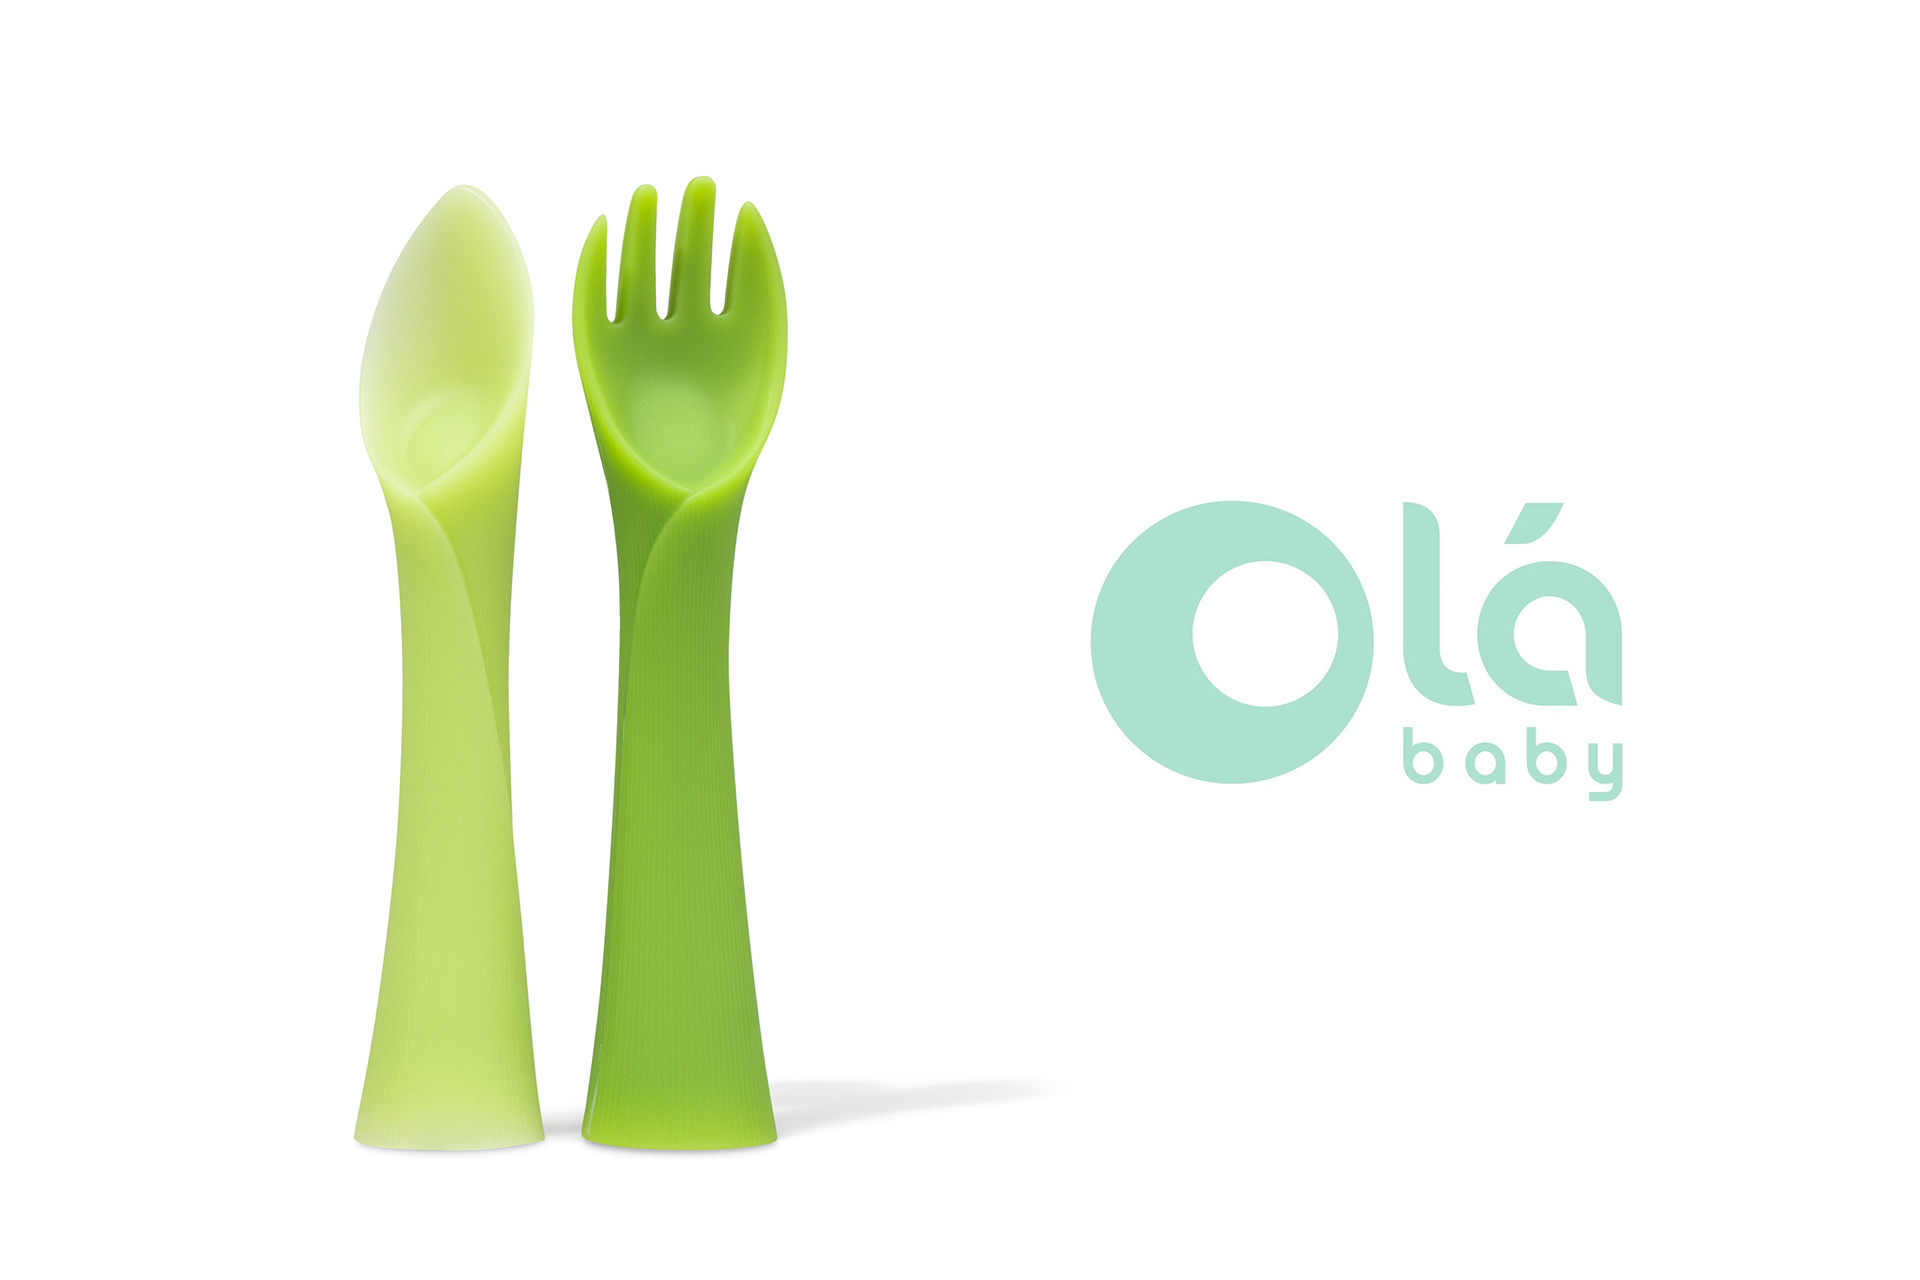 Olababy Training Spoon